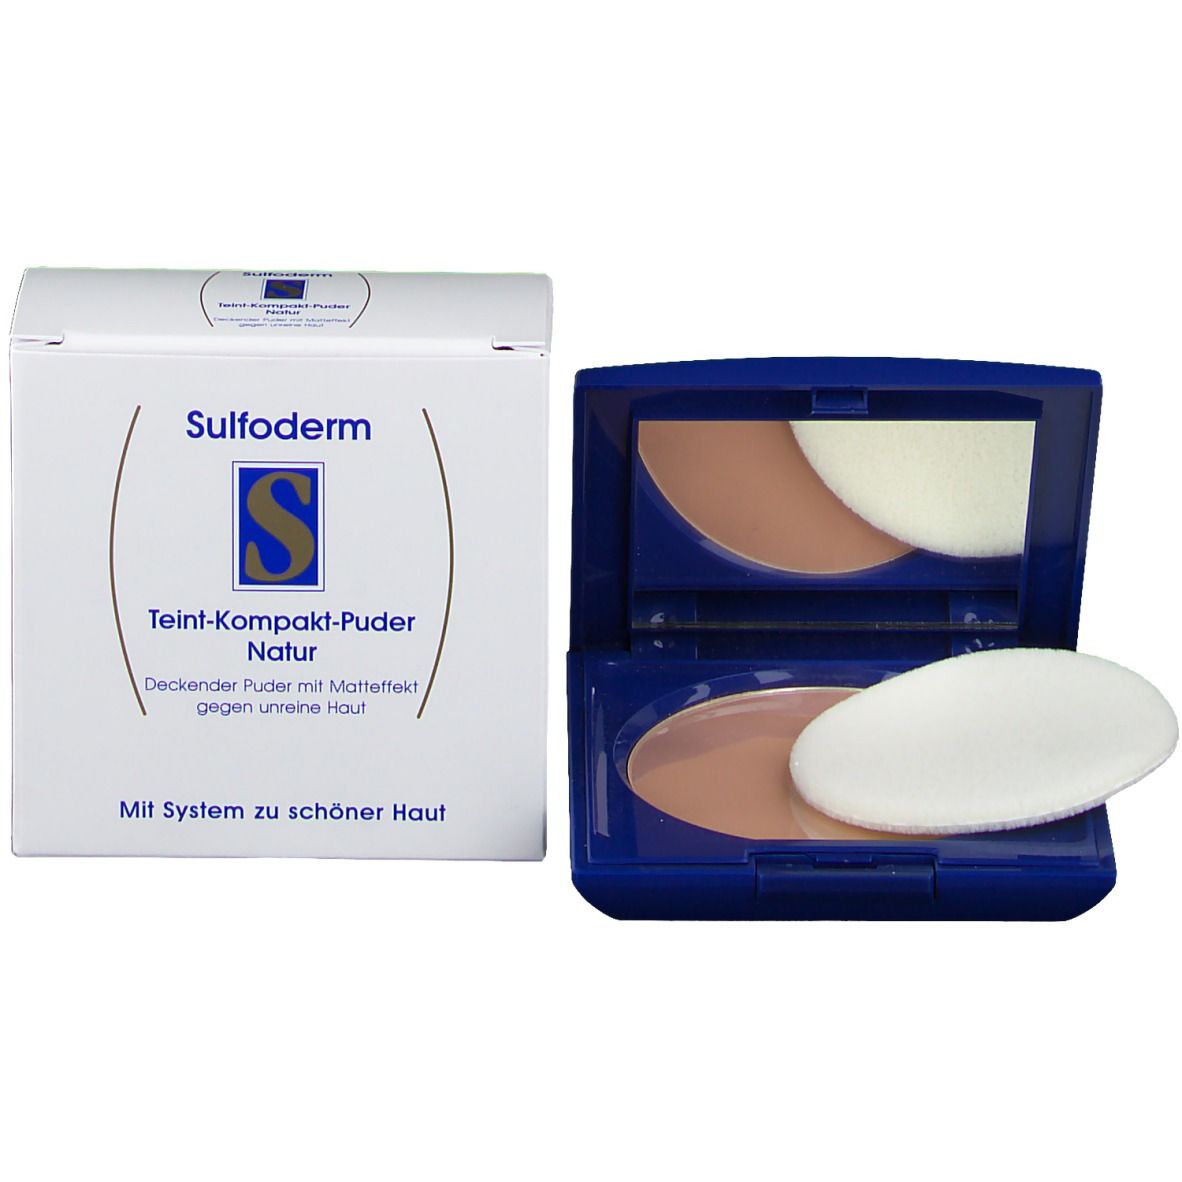 Sulfoderm® S Teint Kompakt Puder Natur